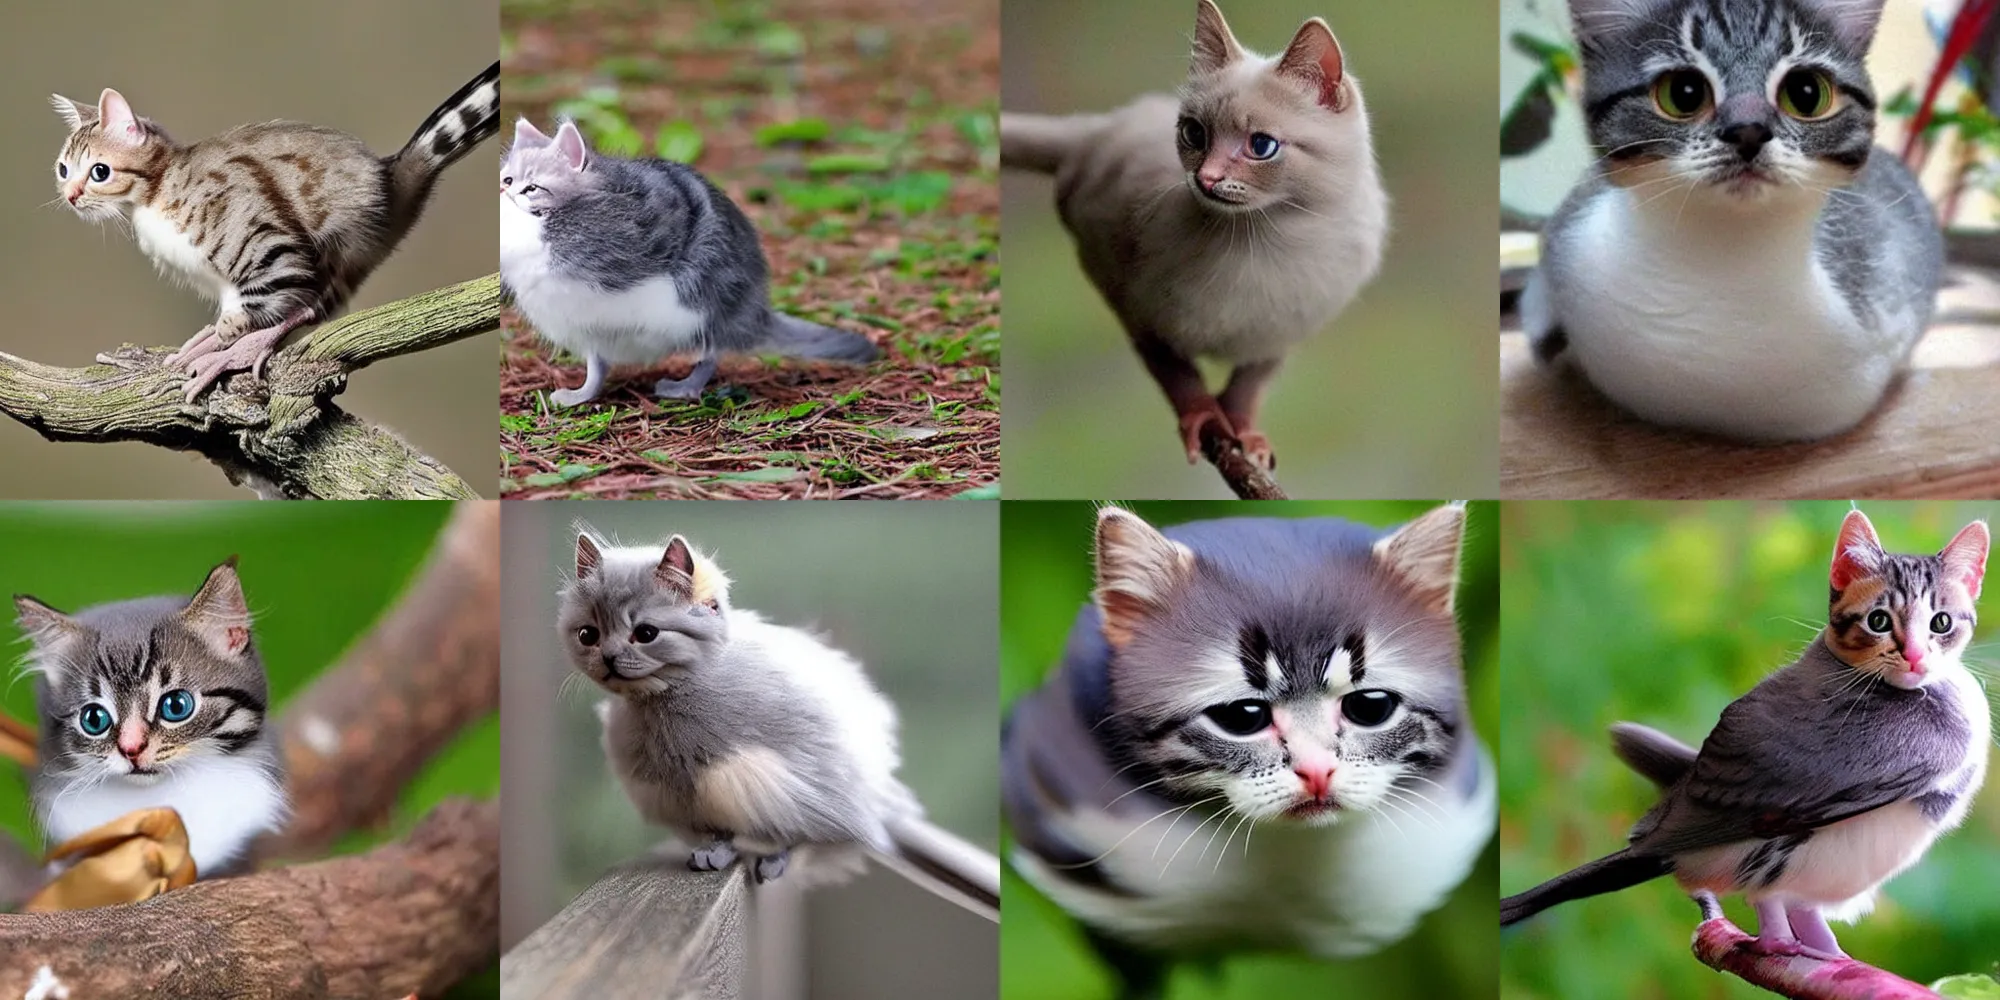 Prompt: Kitty-bird hybrid, cute